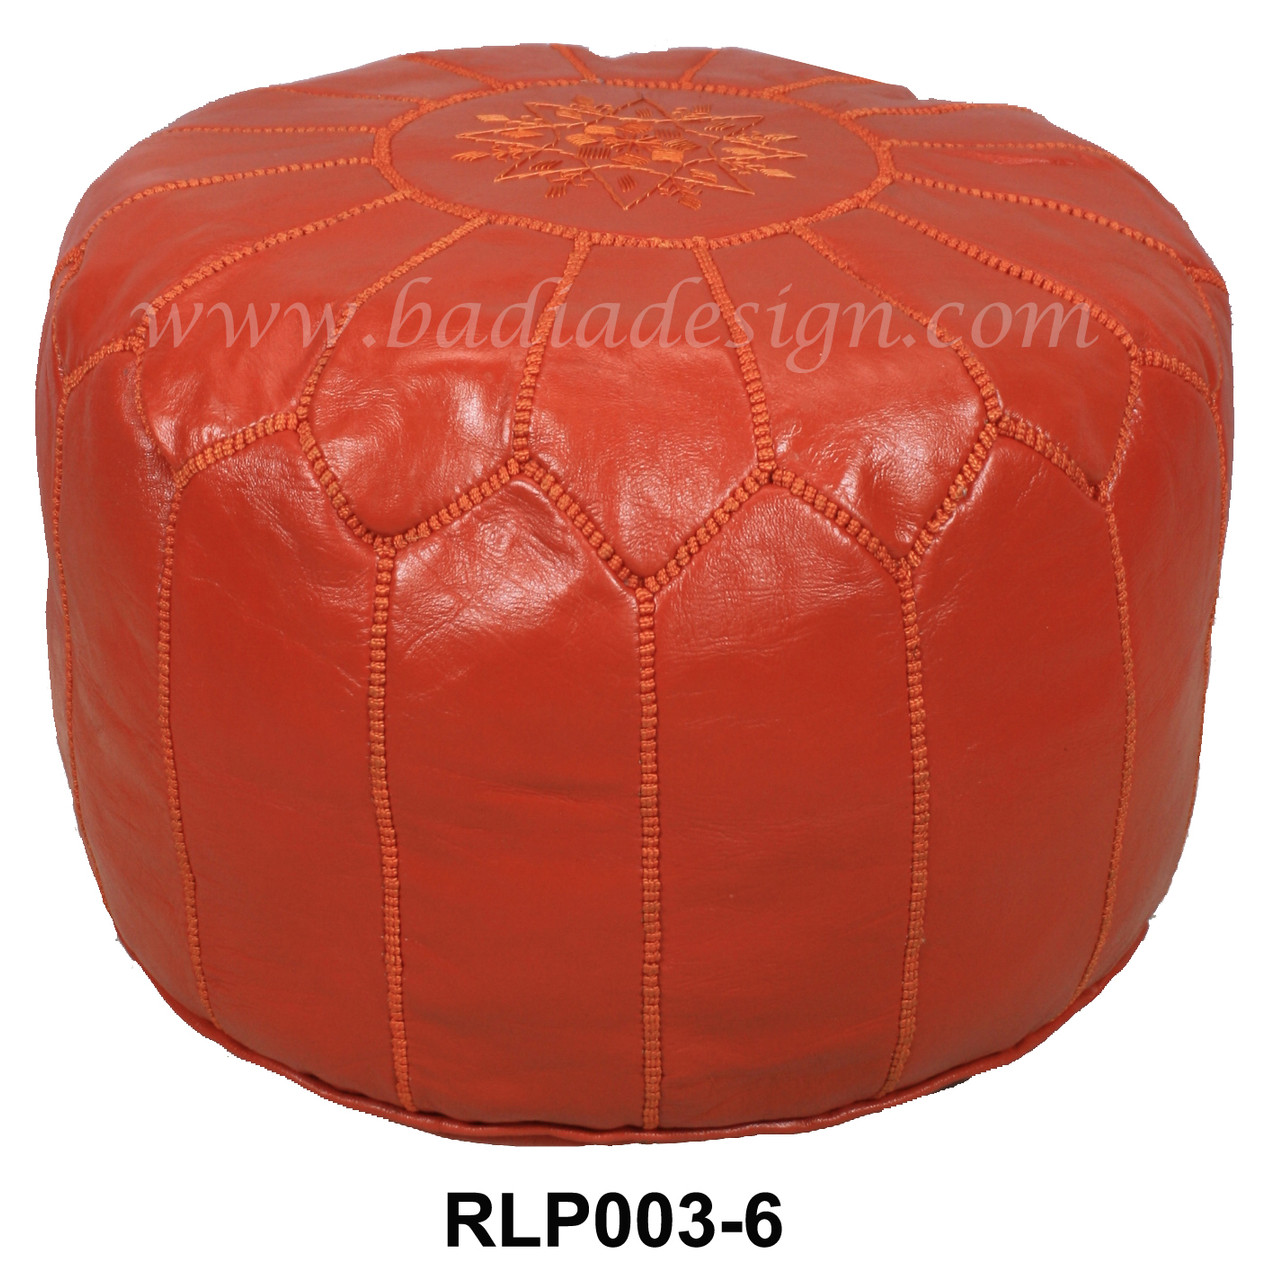 Moroccan Leather Ottoman - RLP003